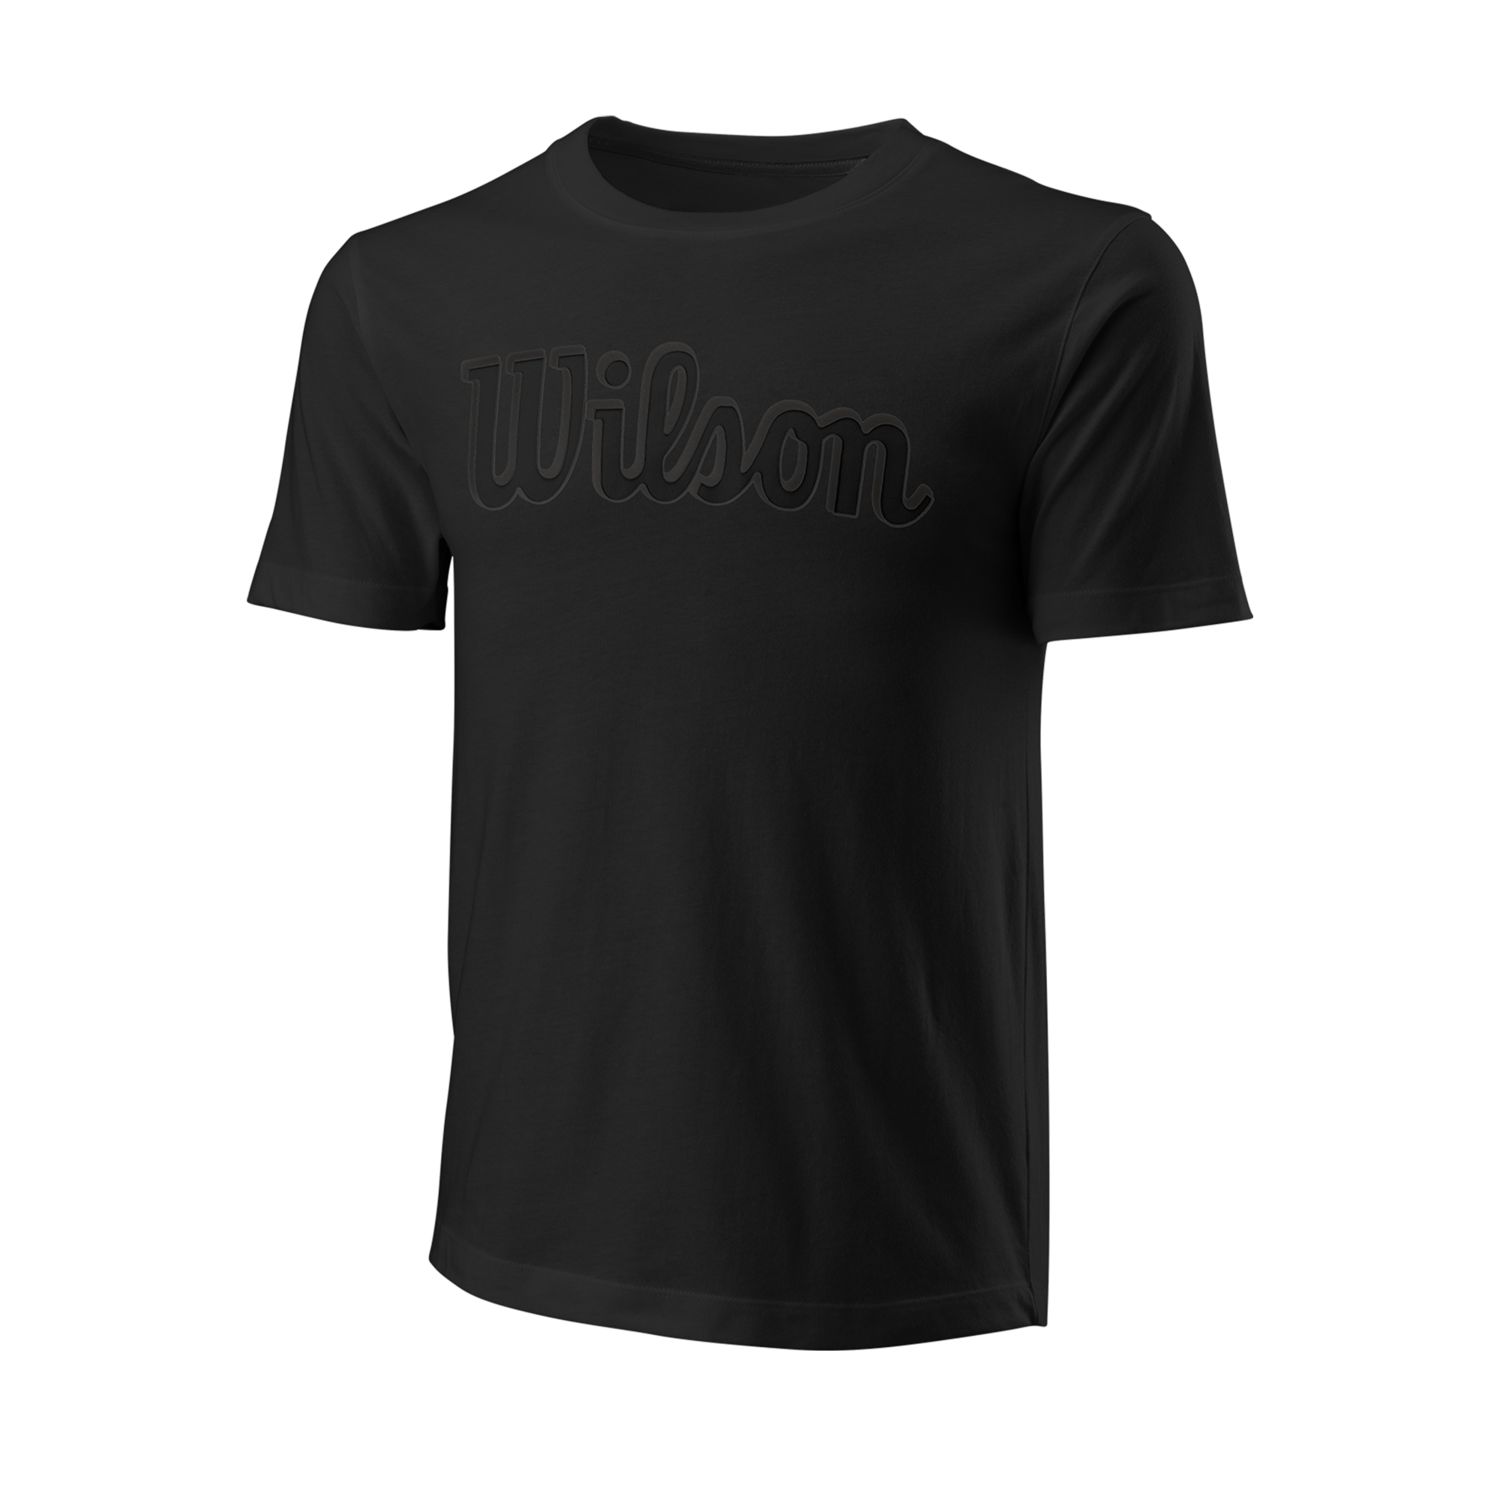 Wilson Script Eco Cotton Men's Tee Slim fit - Black